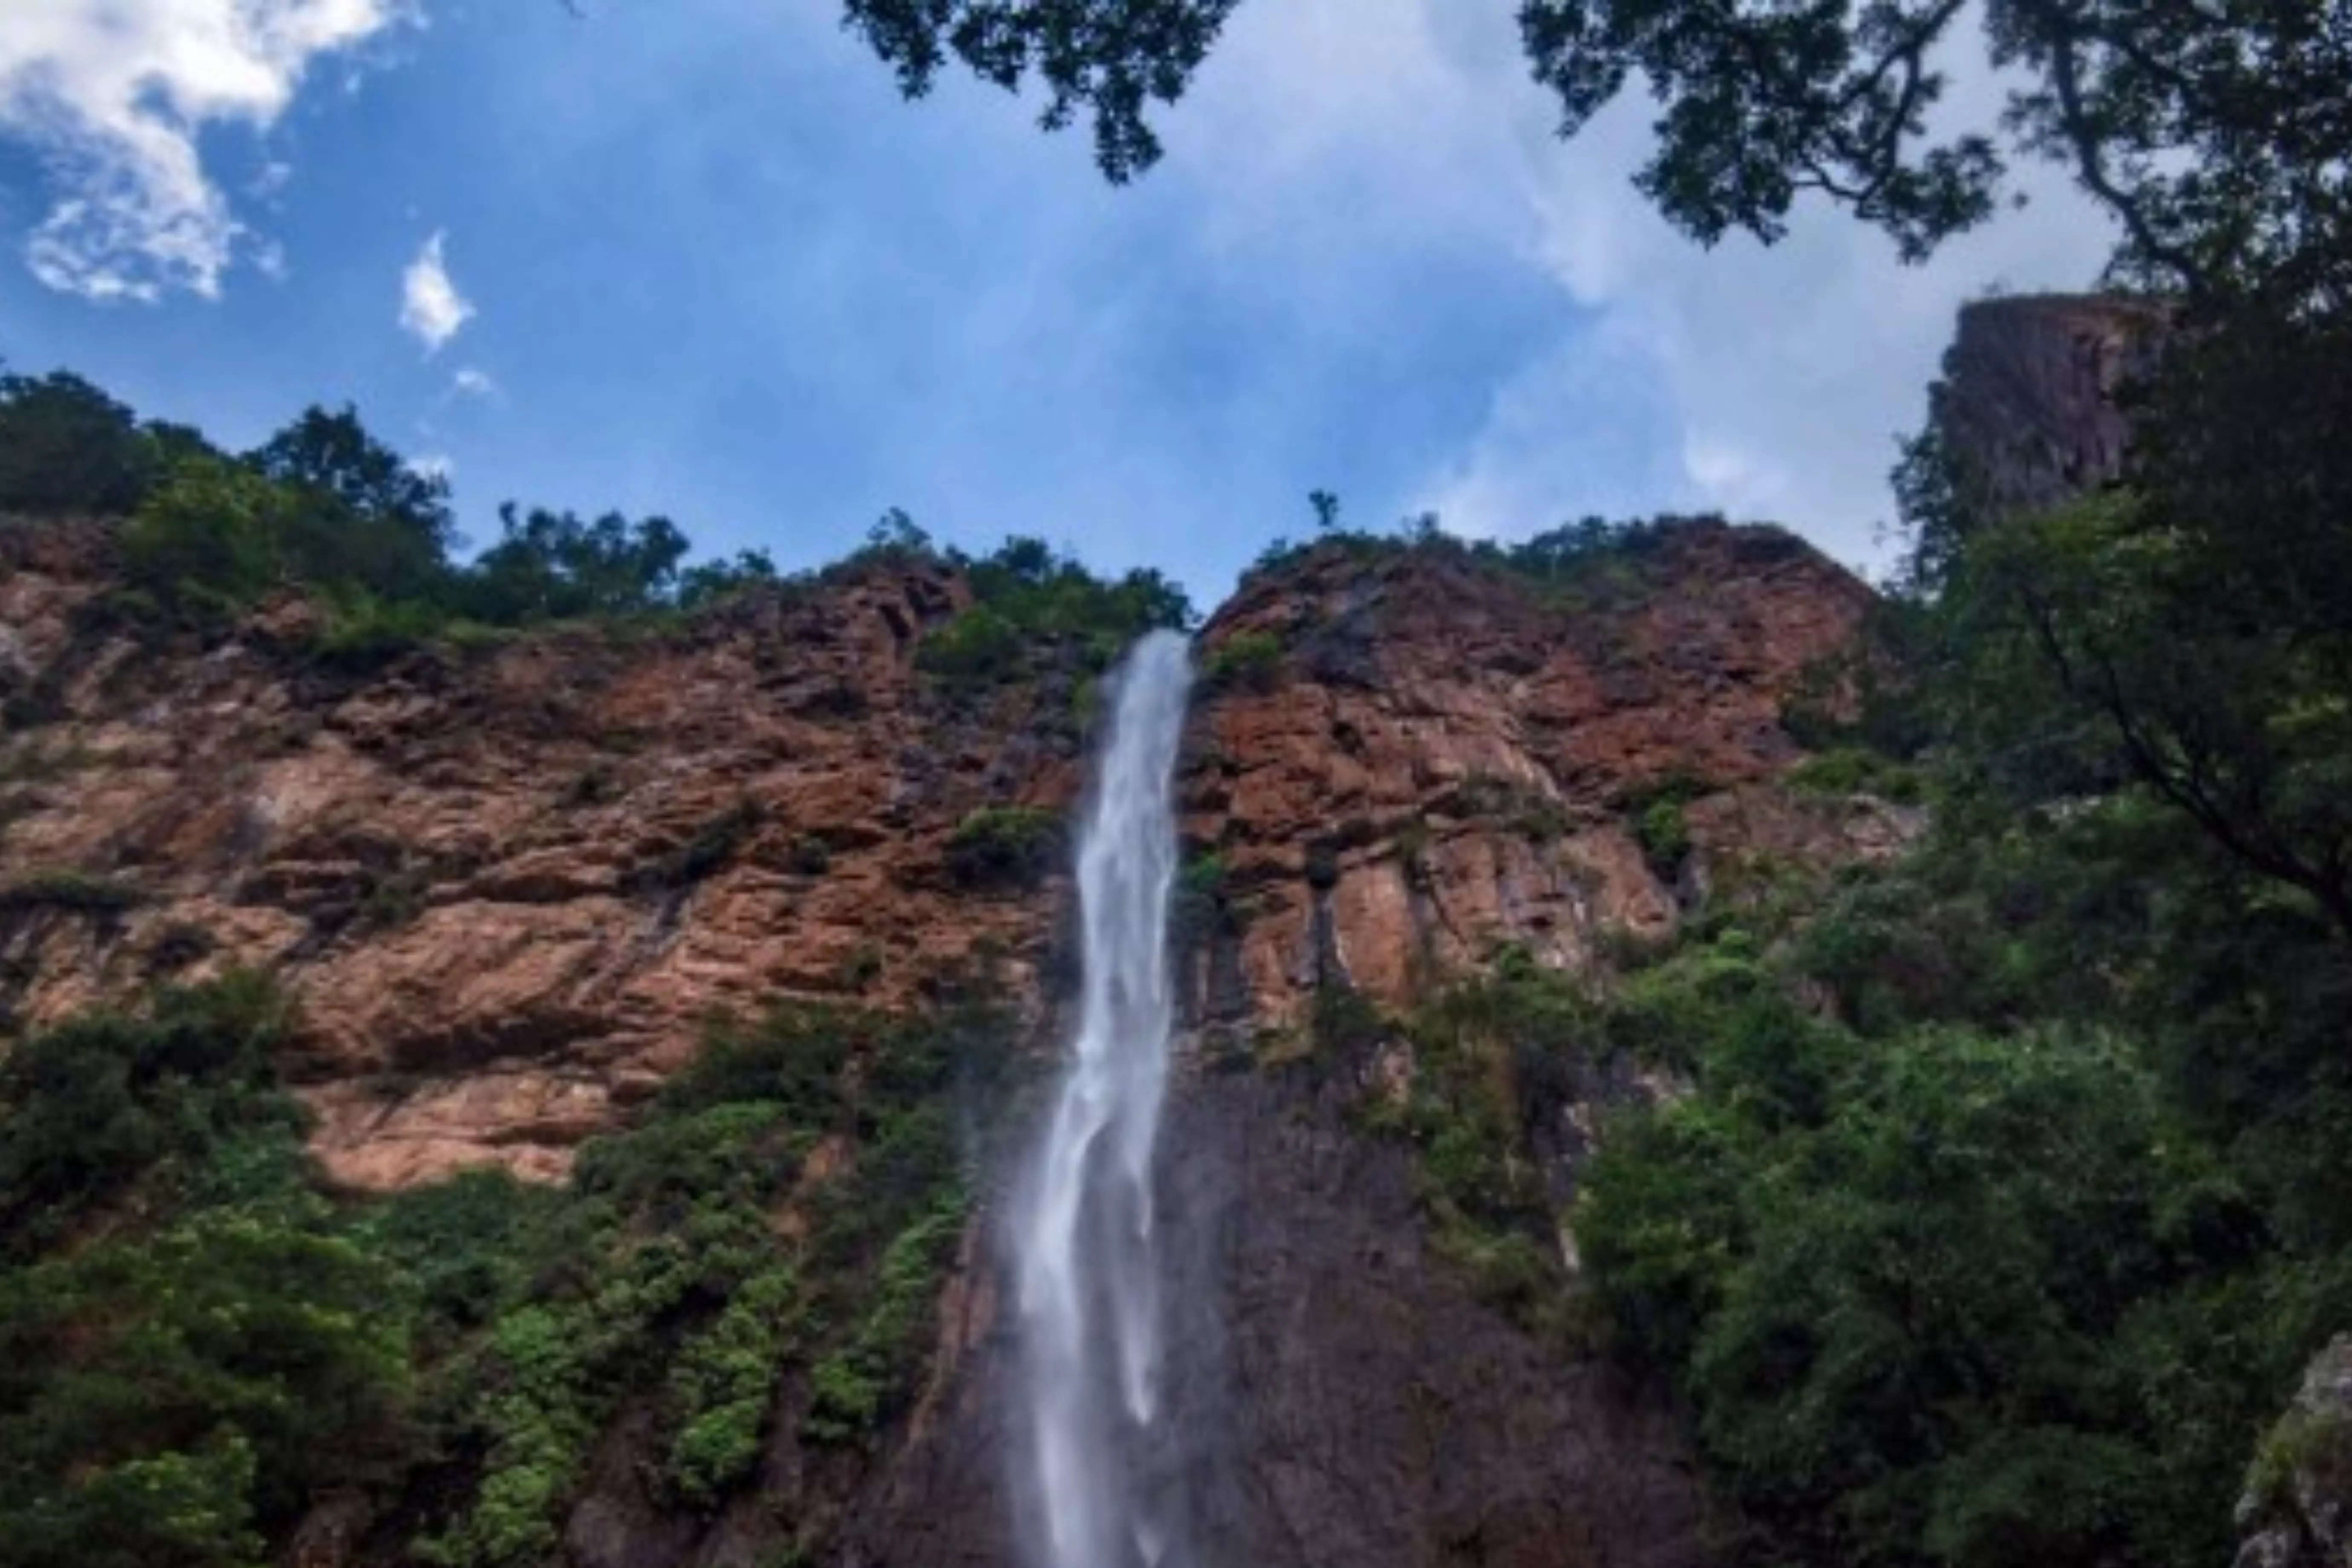 Lakes & Waterfalls of Odisha: Adding to the wholesomeness of tourism bounty